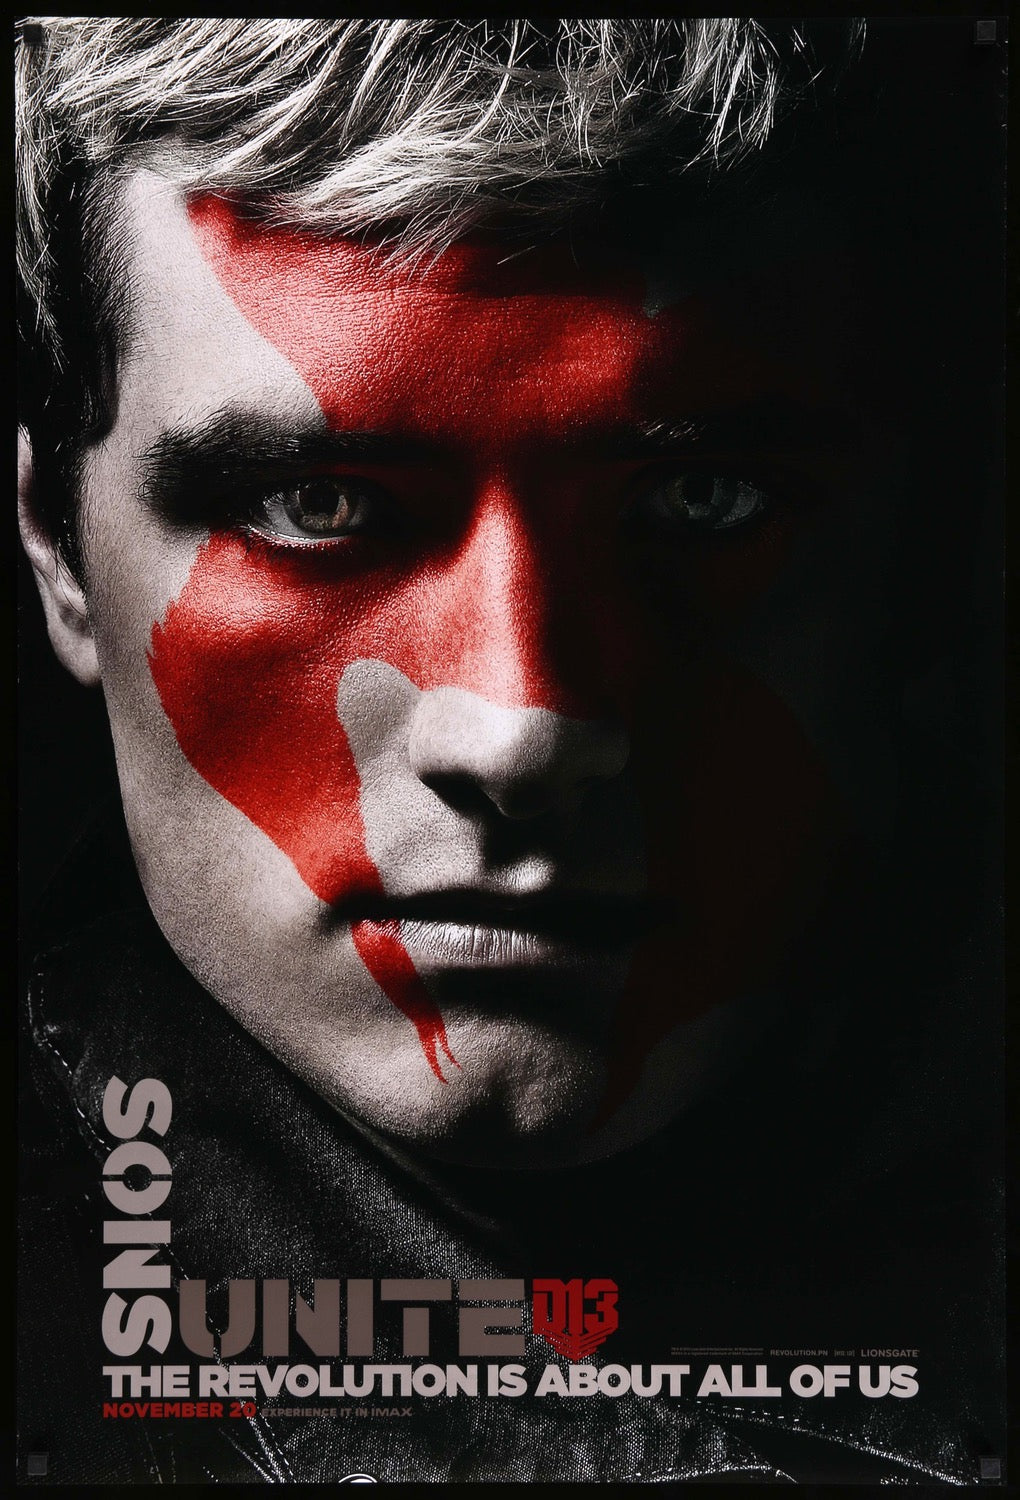 Hunger Games: Mockingjay - Part 2 (2015) original movie poster for sale at Original Film Art